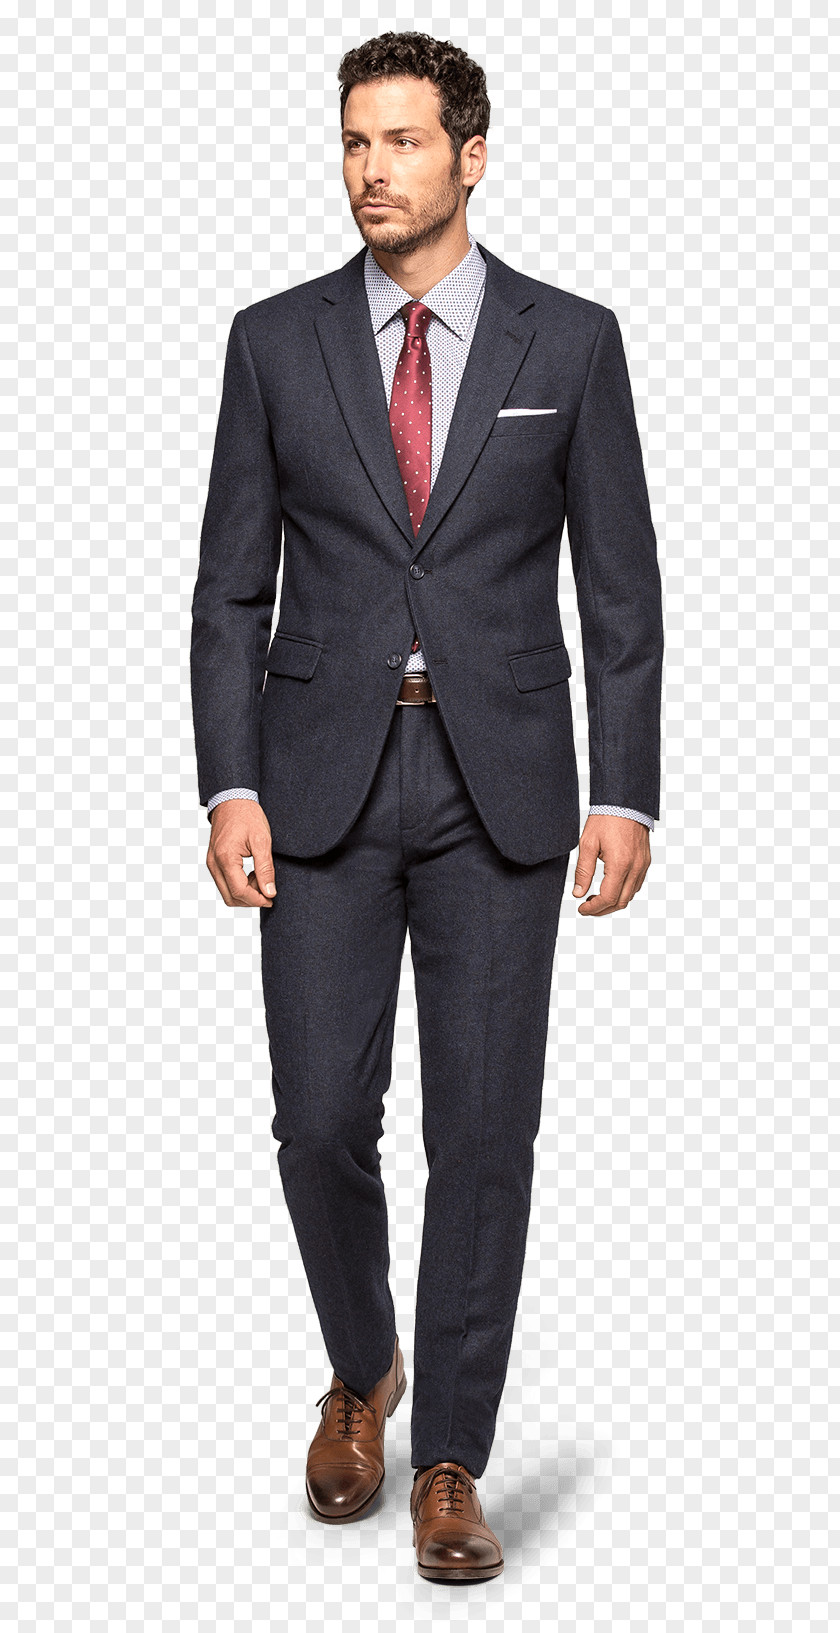 Kurt Angle Blazer Suit Jacket JoS. A. Bank Clothiers PNG